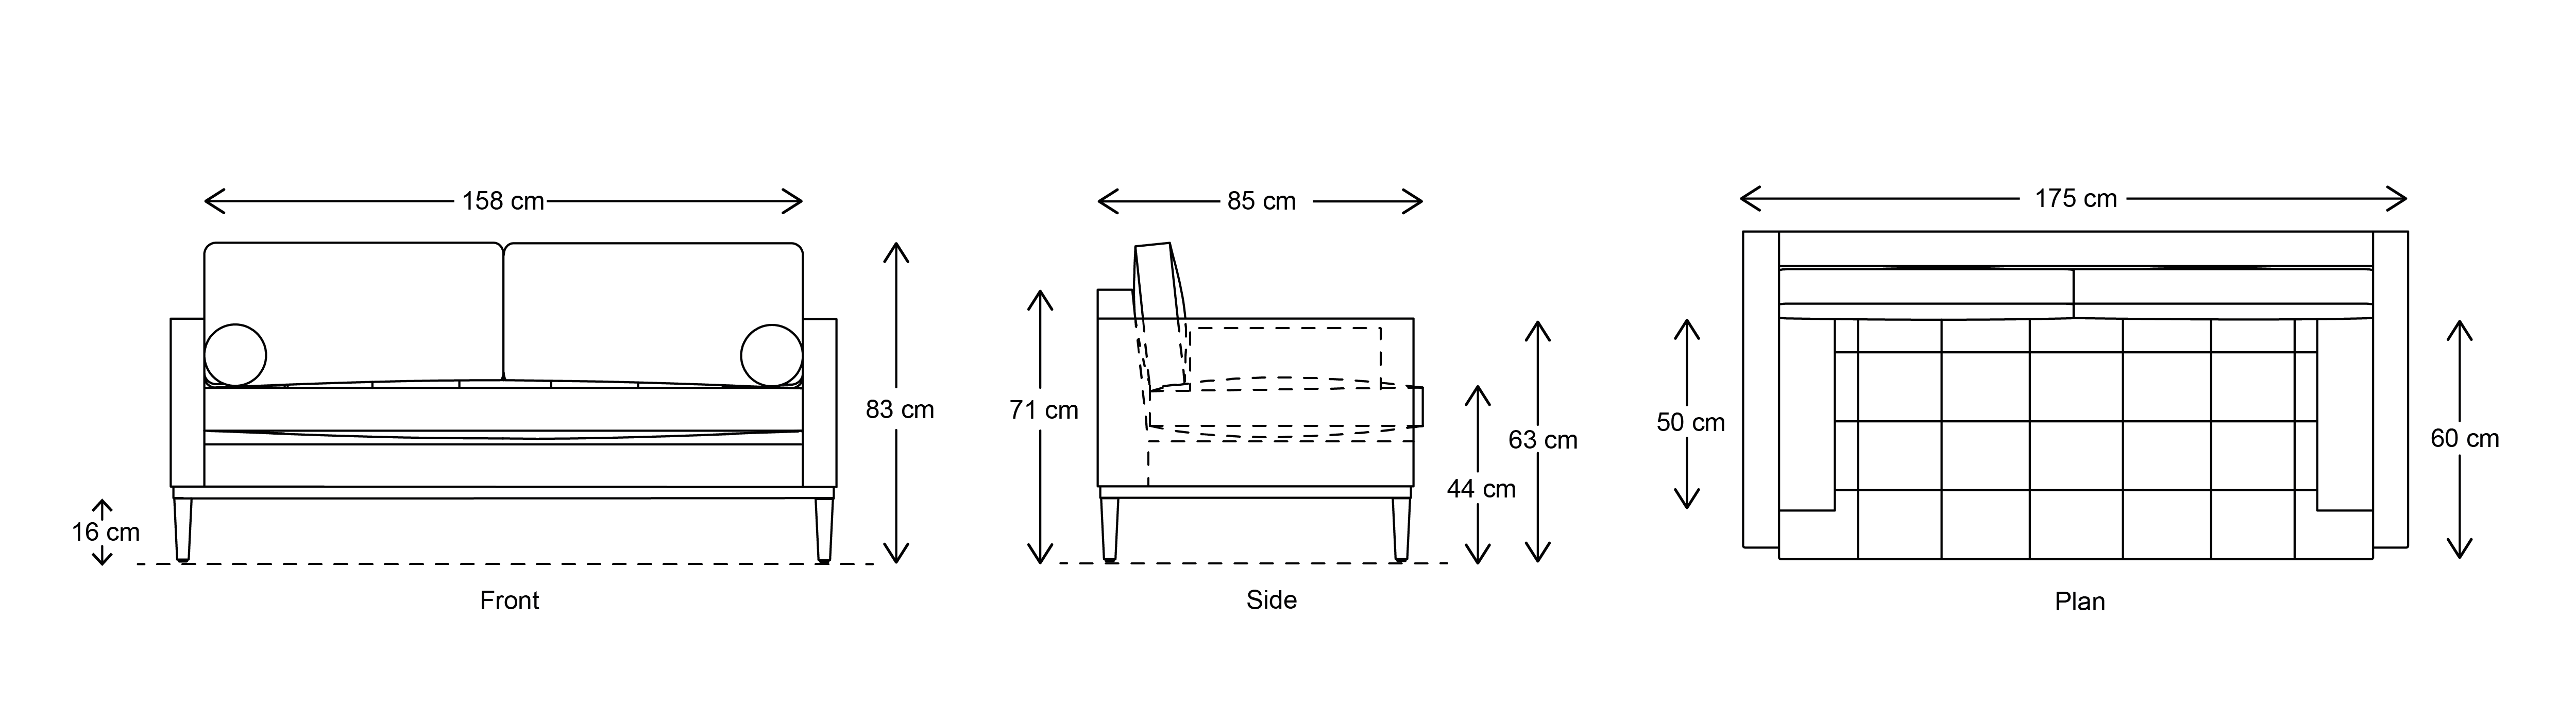 Model 02 2 Seater Sofa Dimensions Drawing